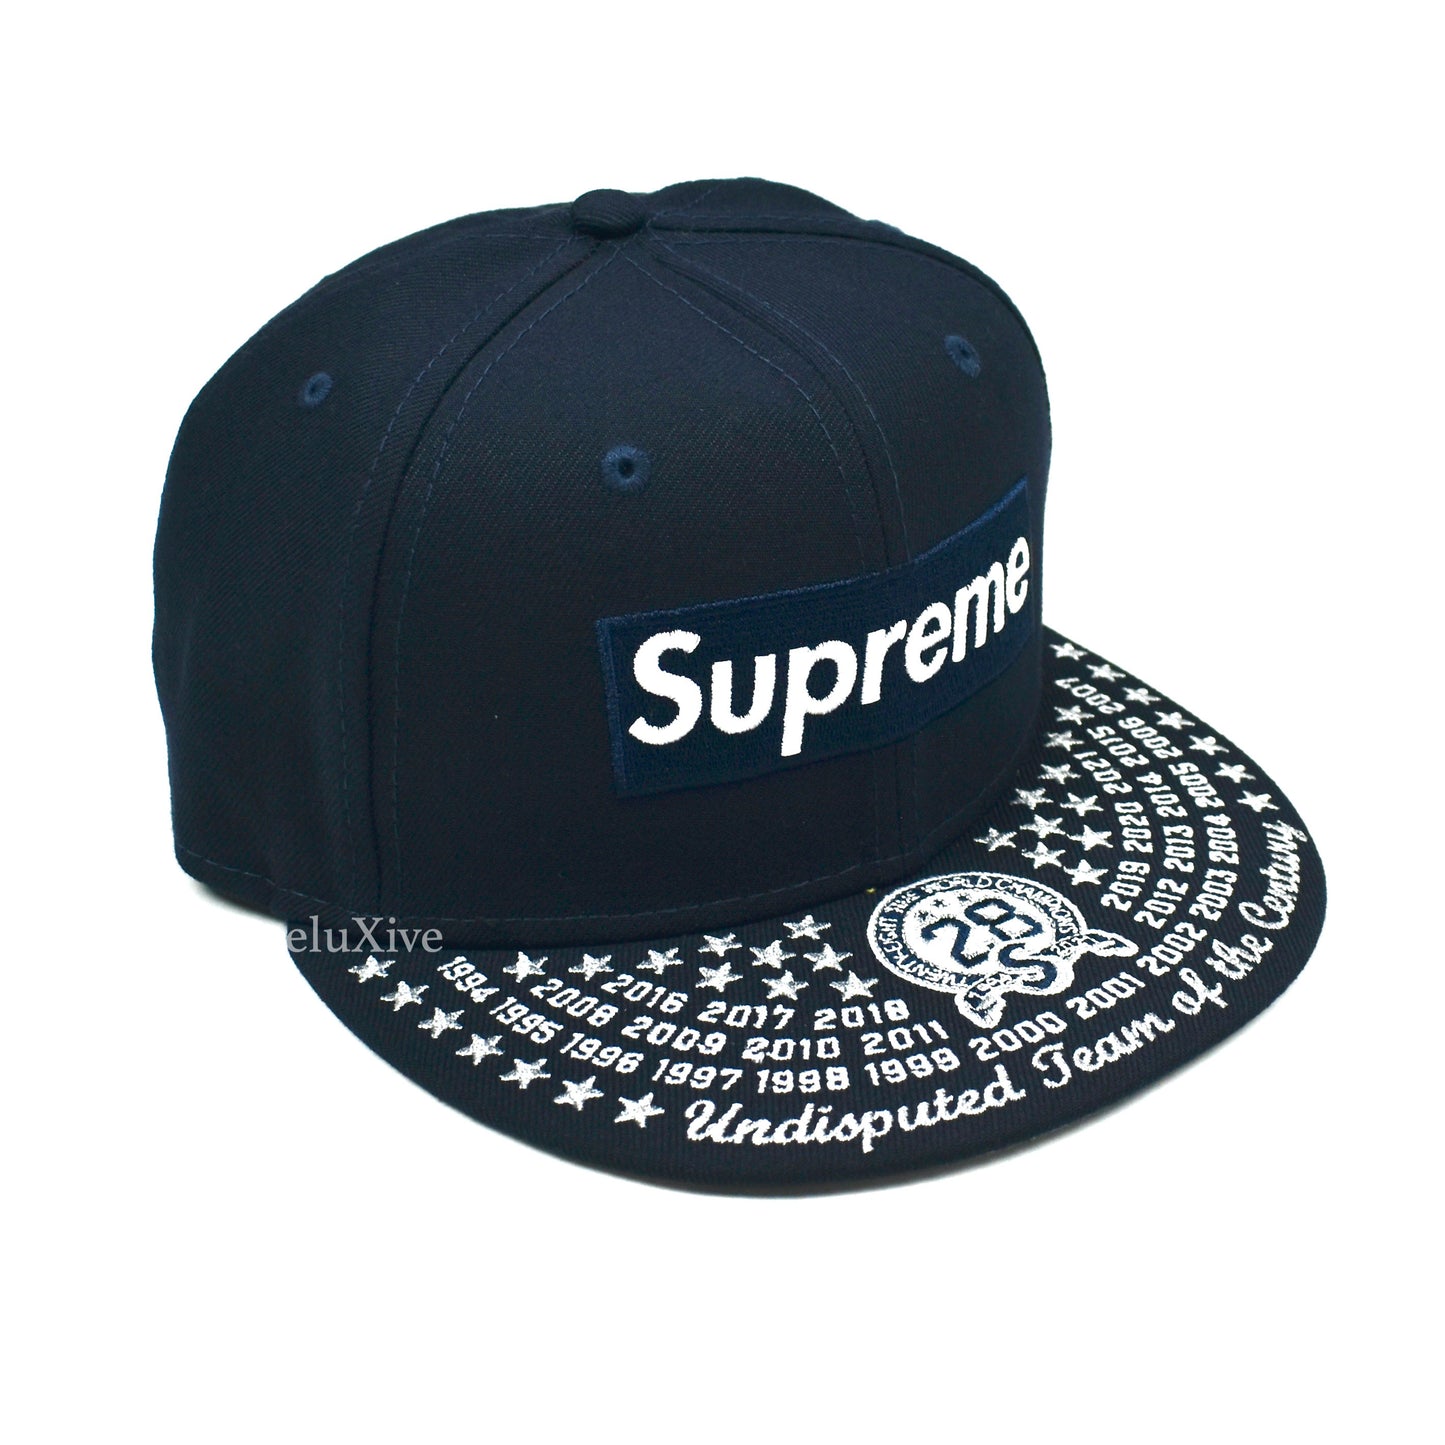 Supreme x New Era - Undisputed Box Logo Hat (Navy)